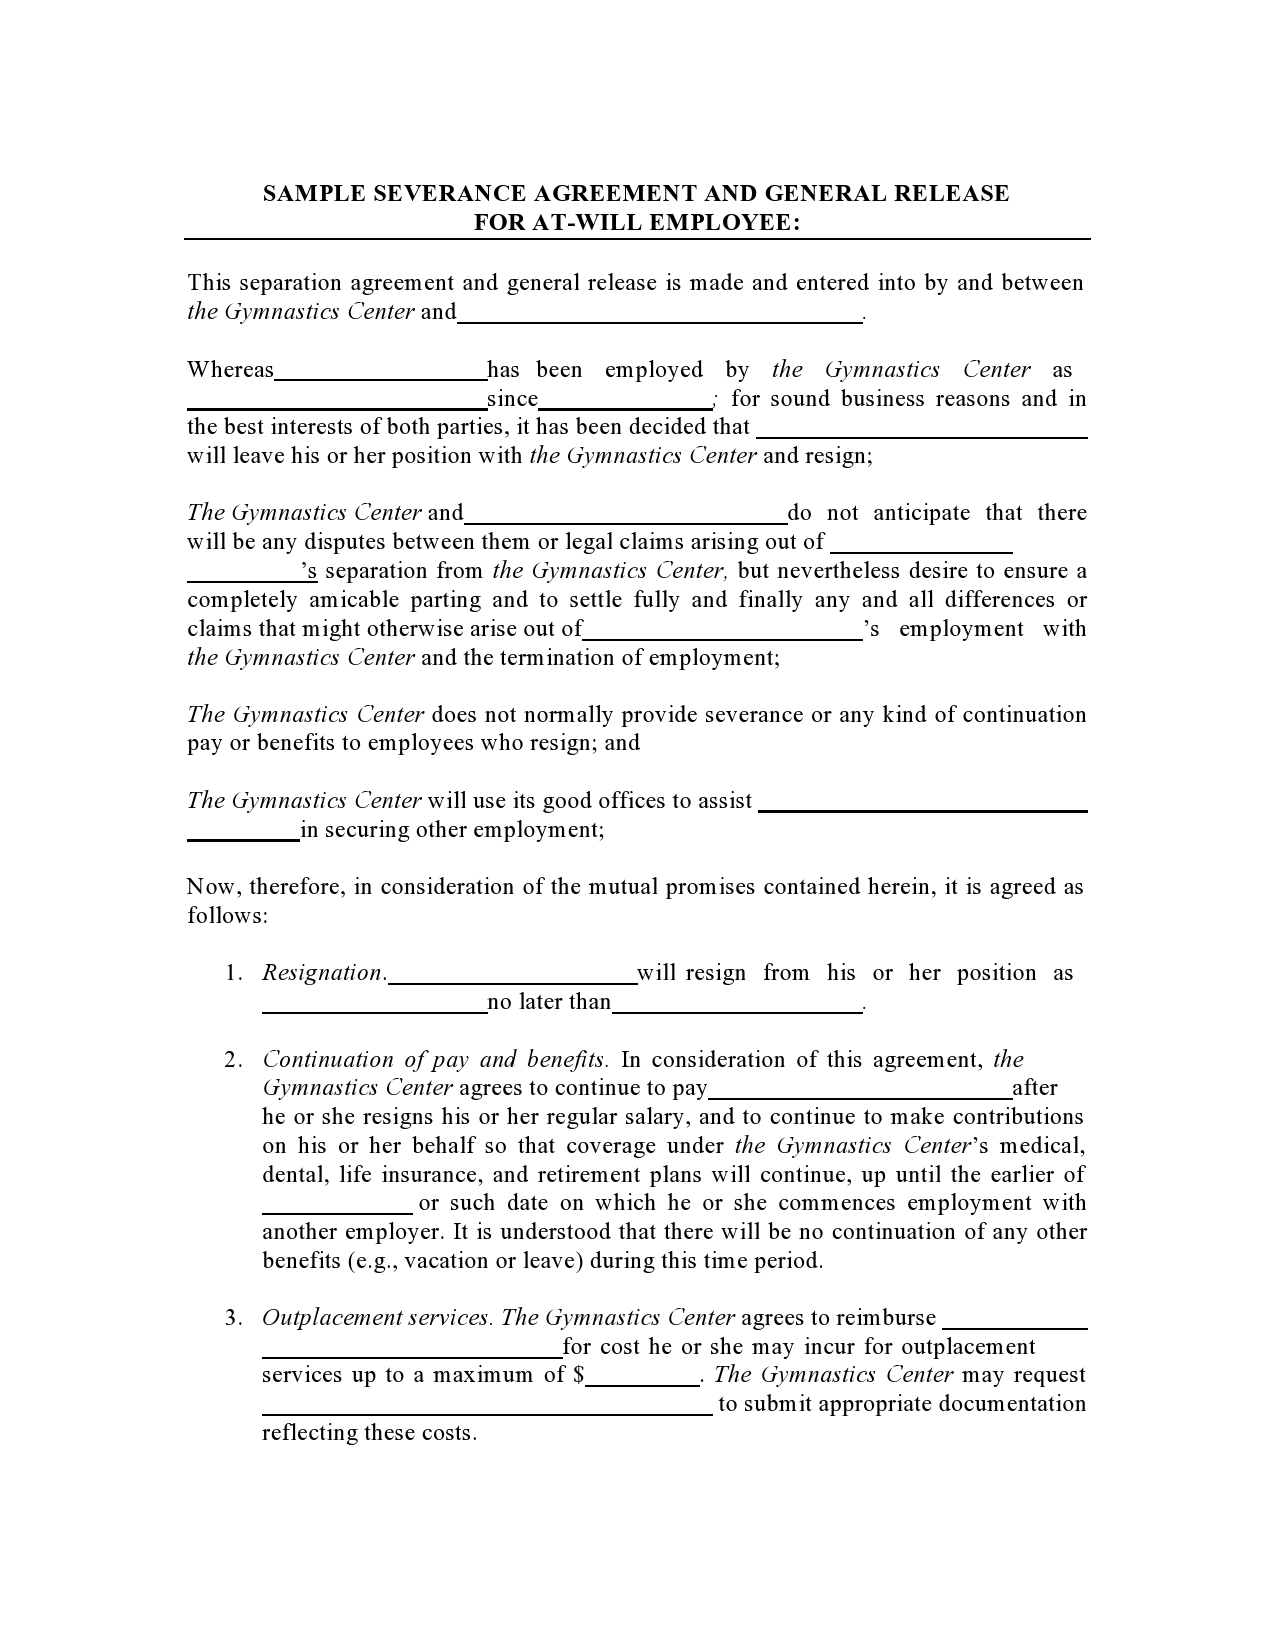 Free severance agreement template 39